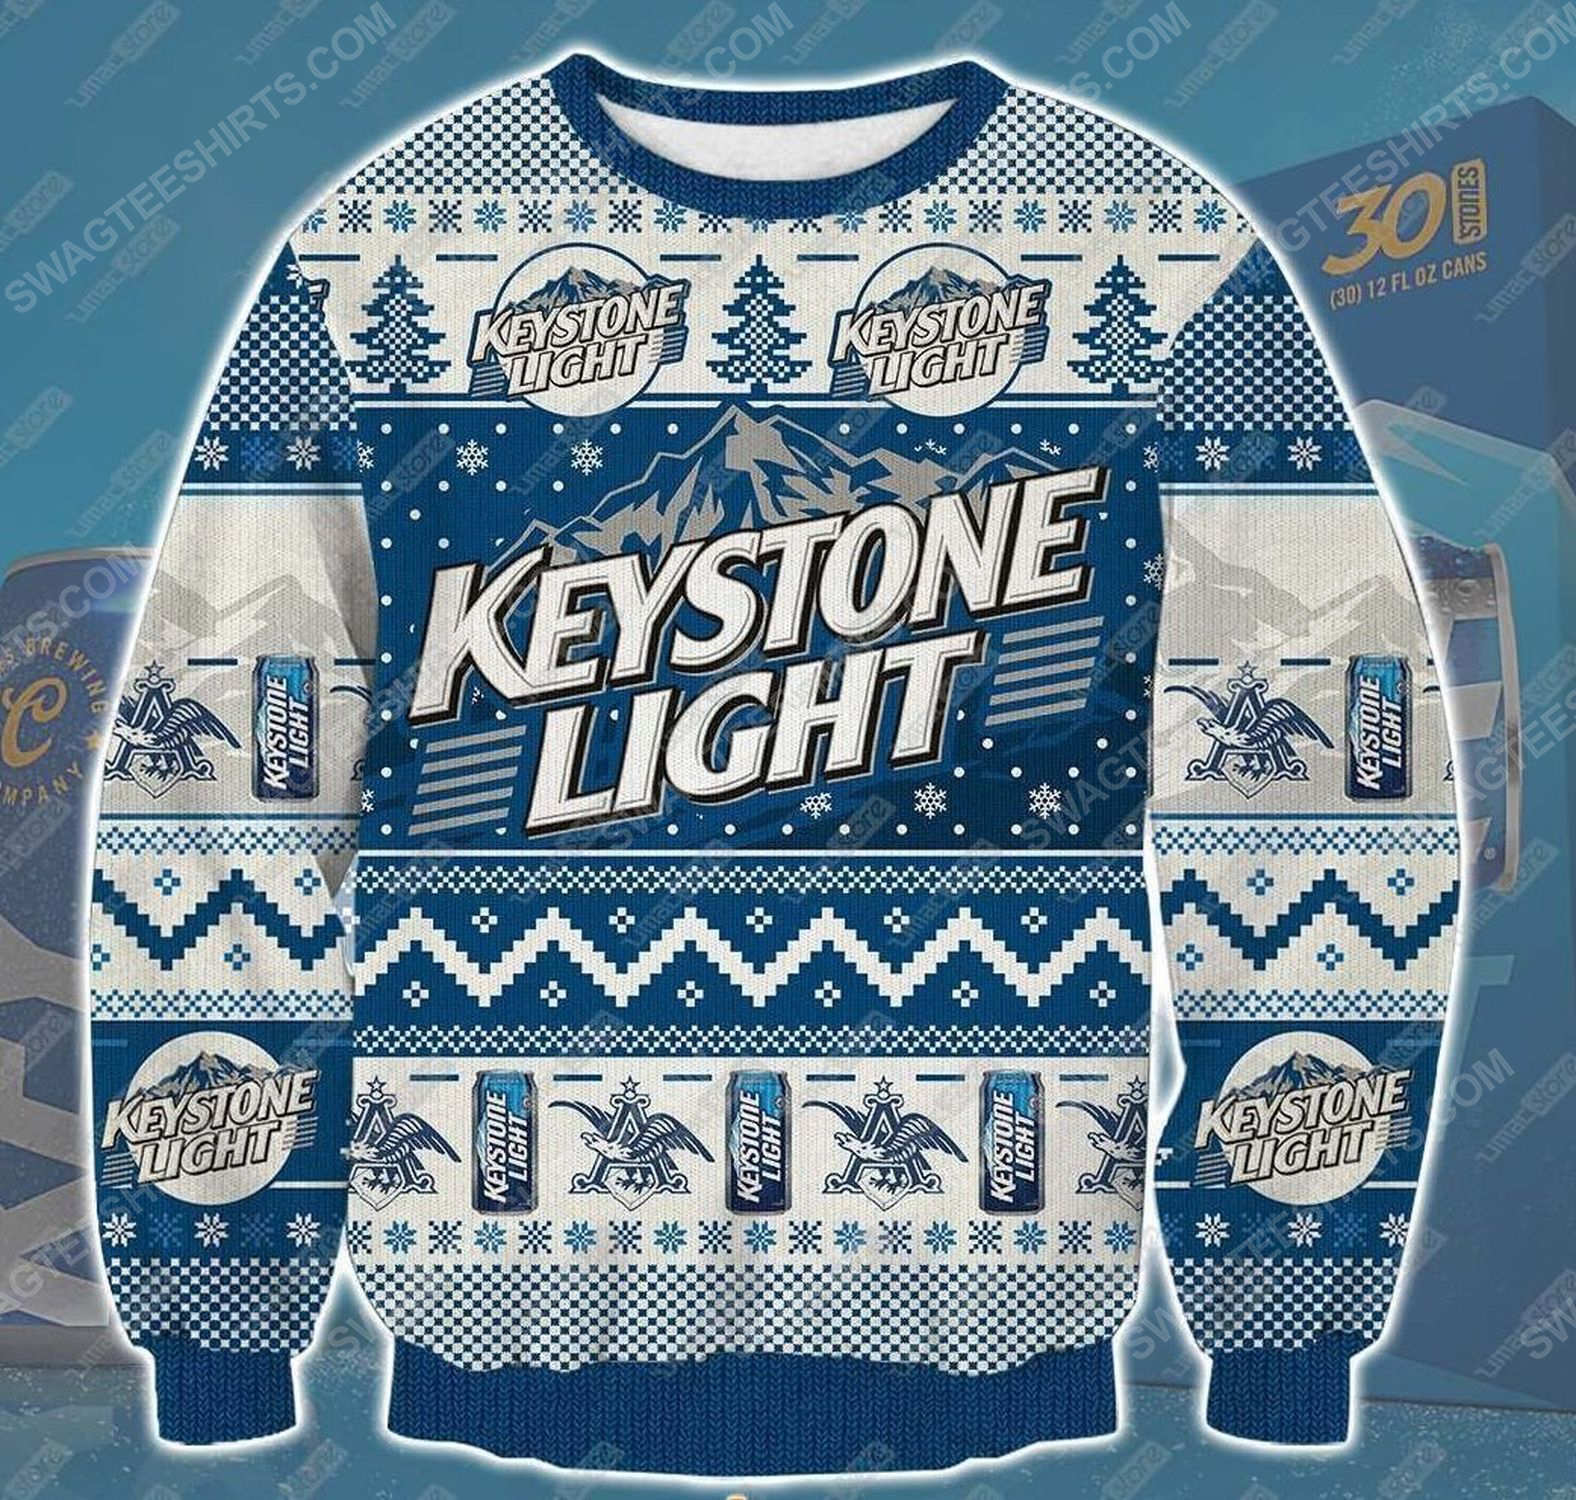 Keystone light beer ugly christmas sweater - Copy (2)